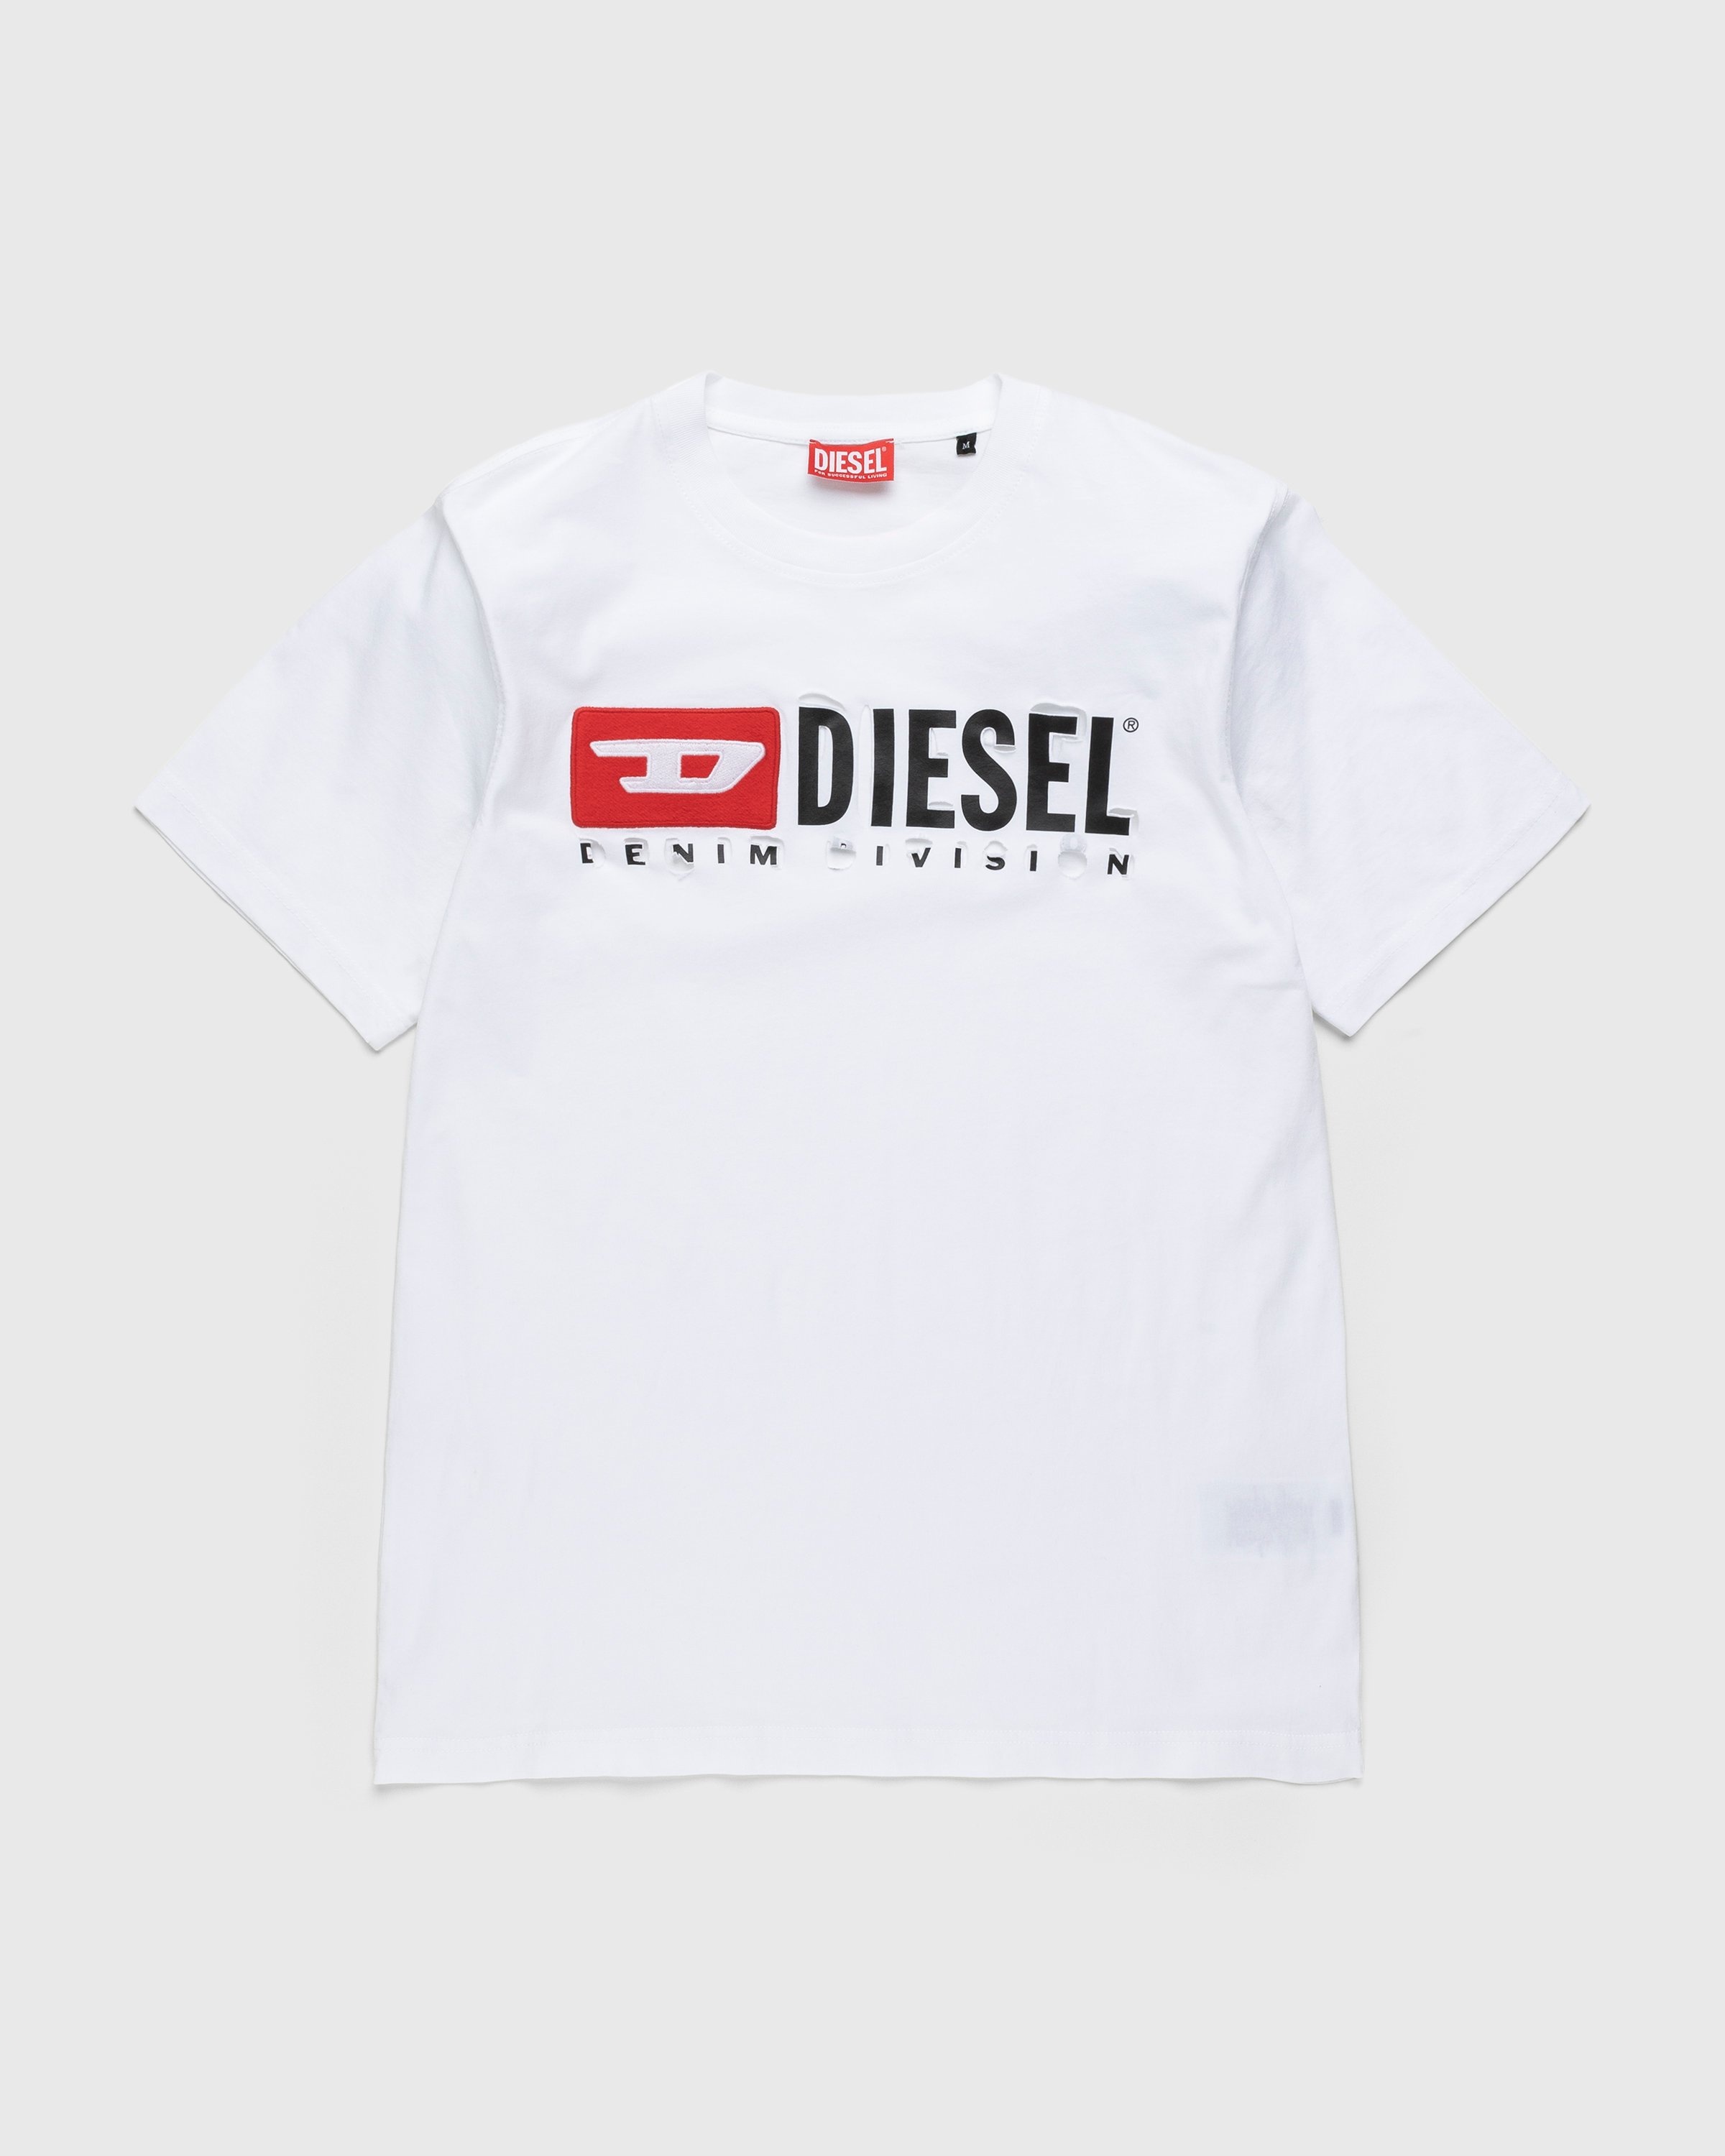 ik draag kleding Verhogen een experiment doen Diesel – Denim Division T-Shirt White | Highsnobiety Shop